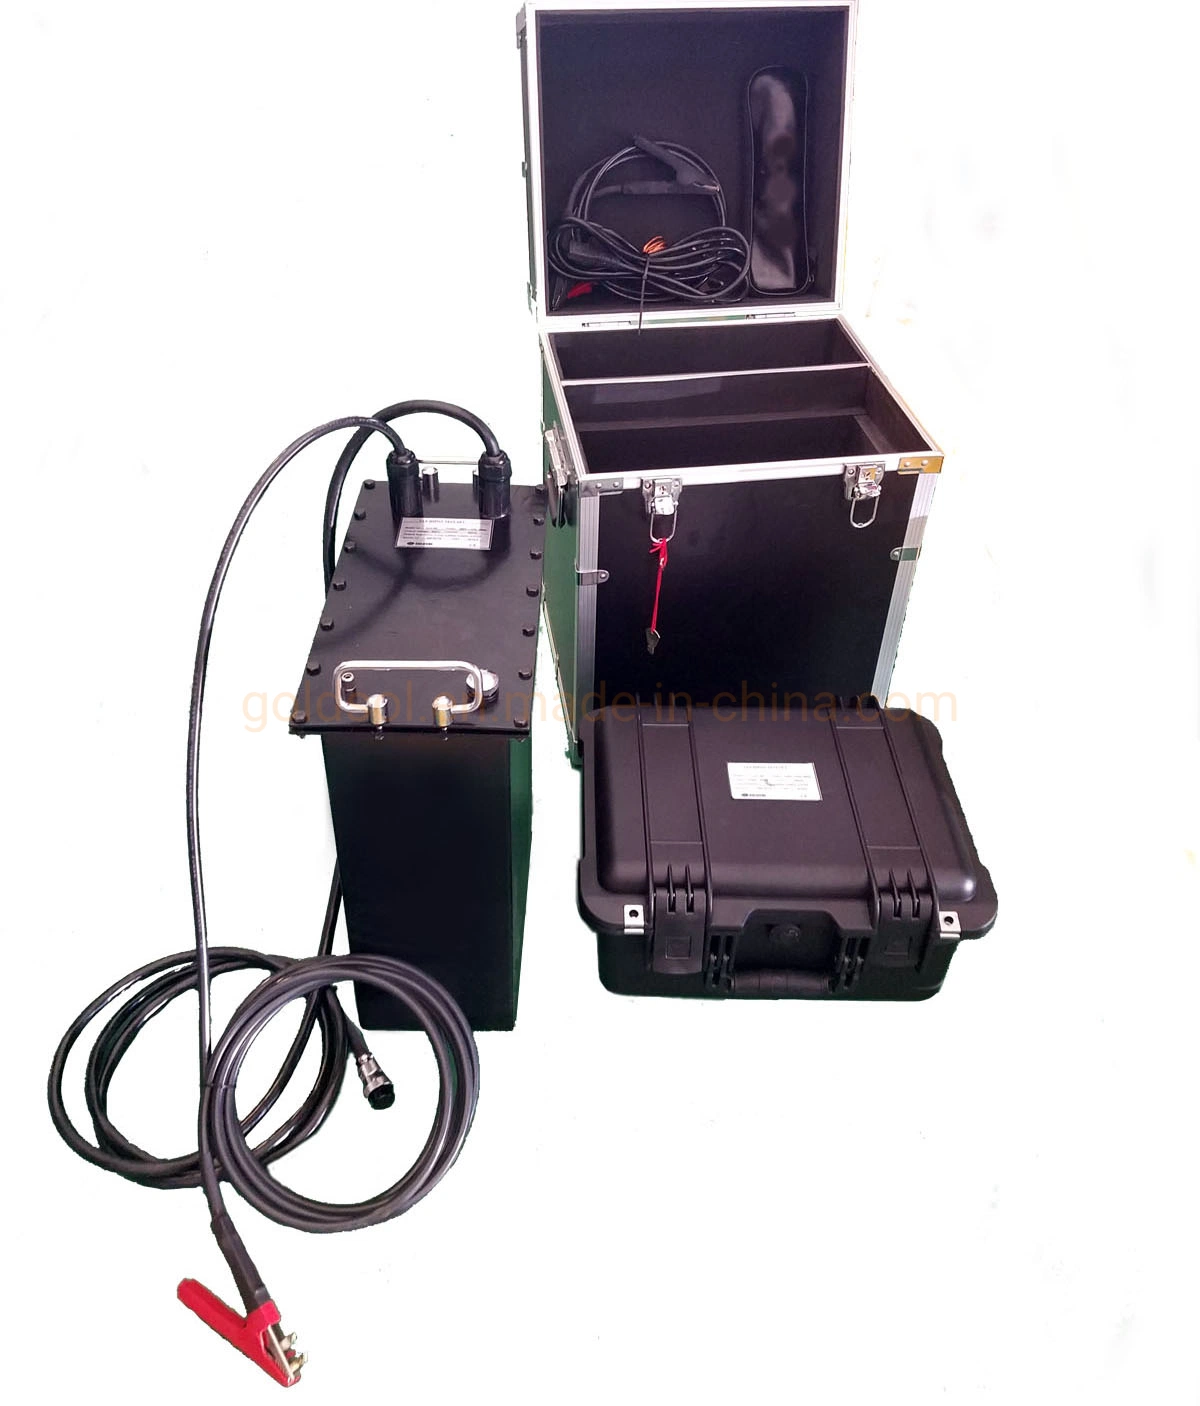 0.1Hz Vlf AC Hipot High Withstand Voltage Power Cable Test Set with Tan Delta Diagnostics 60kv